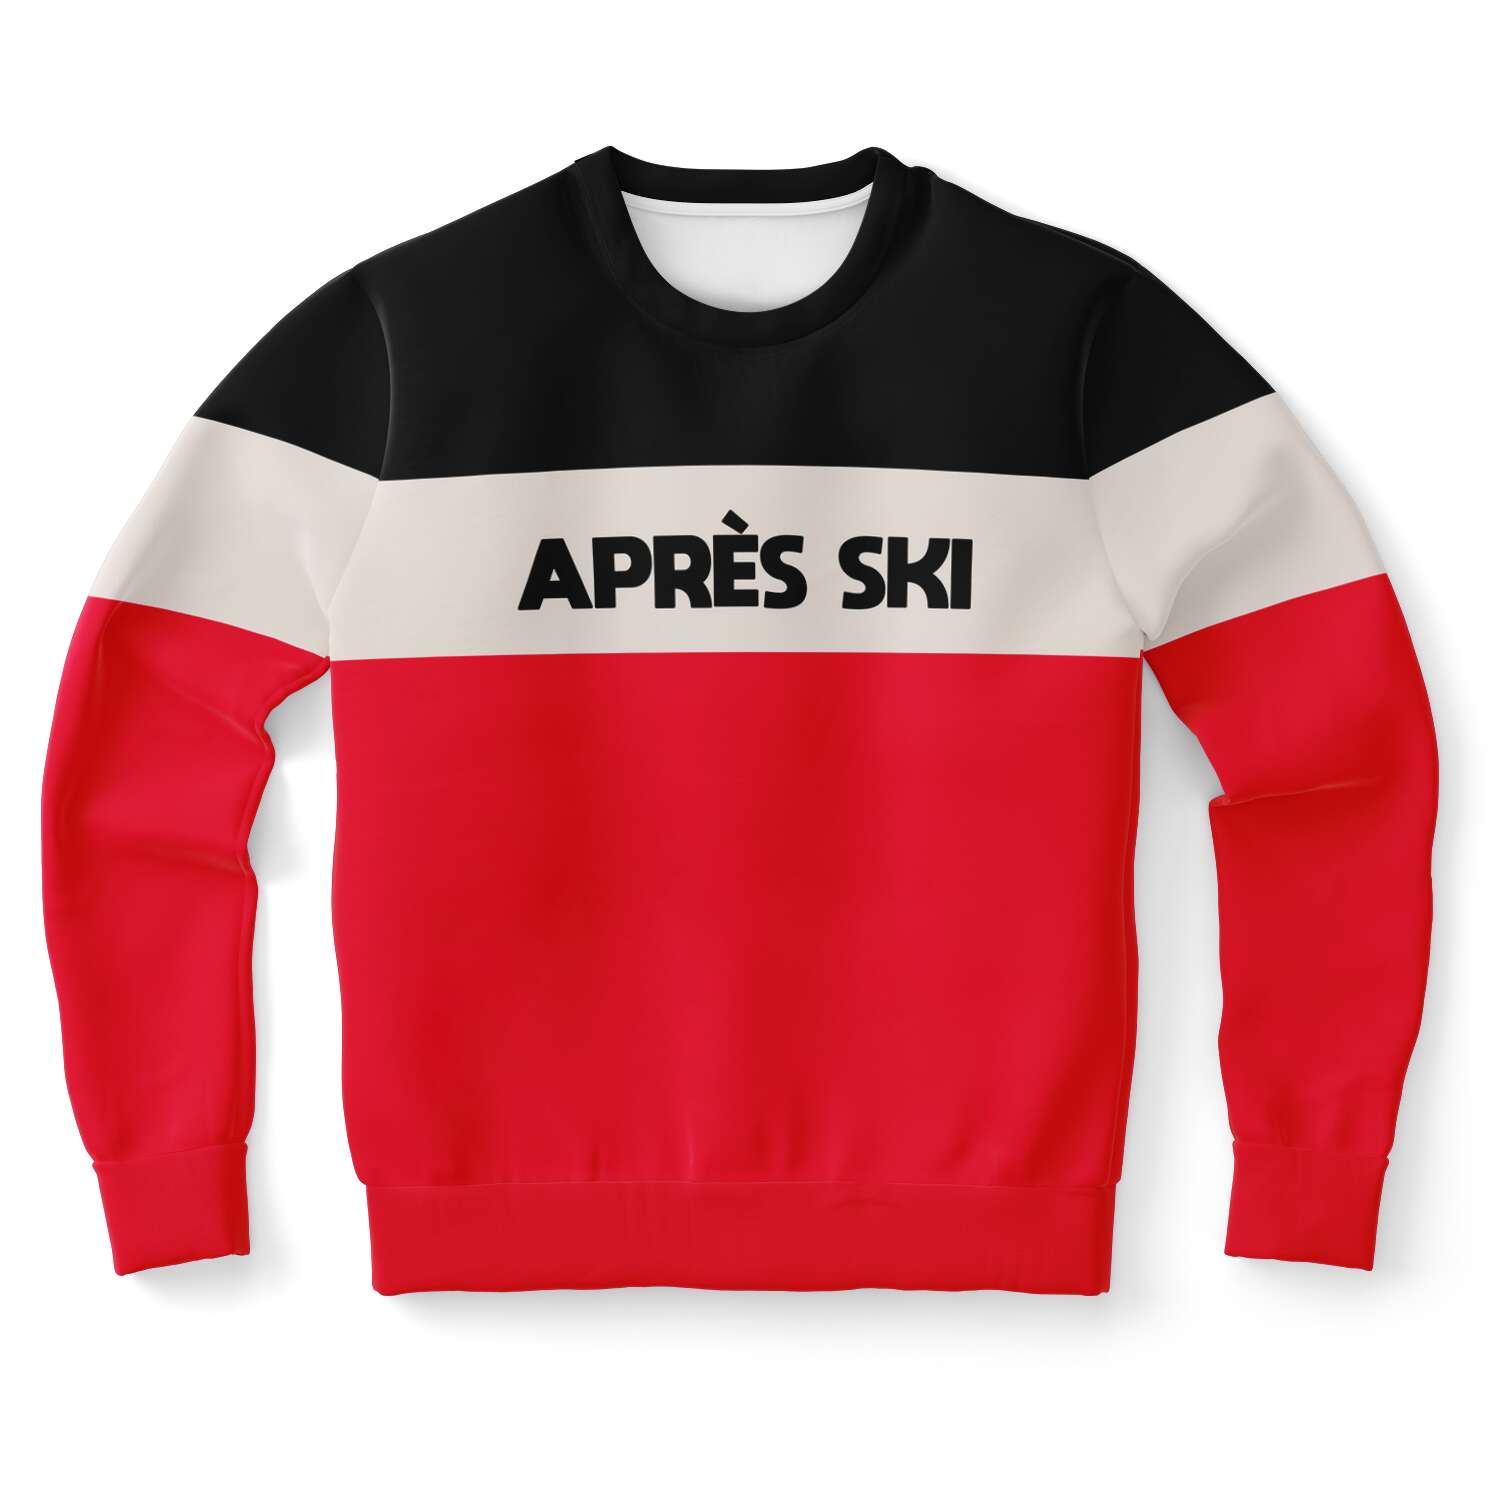 bijvoeglijk naamwoord Prestatie Vermomd Apres Ski Sweatshirt, Women Men Black Red Color Block Skiing Skier Sno –  Starcove Fashion